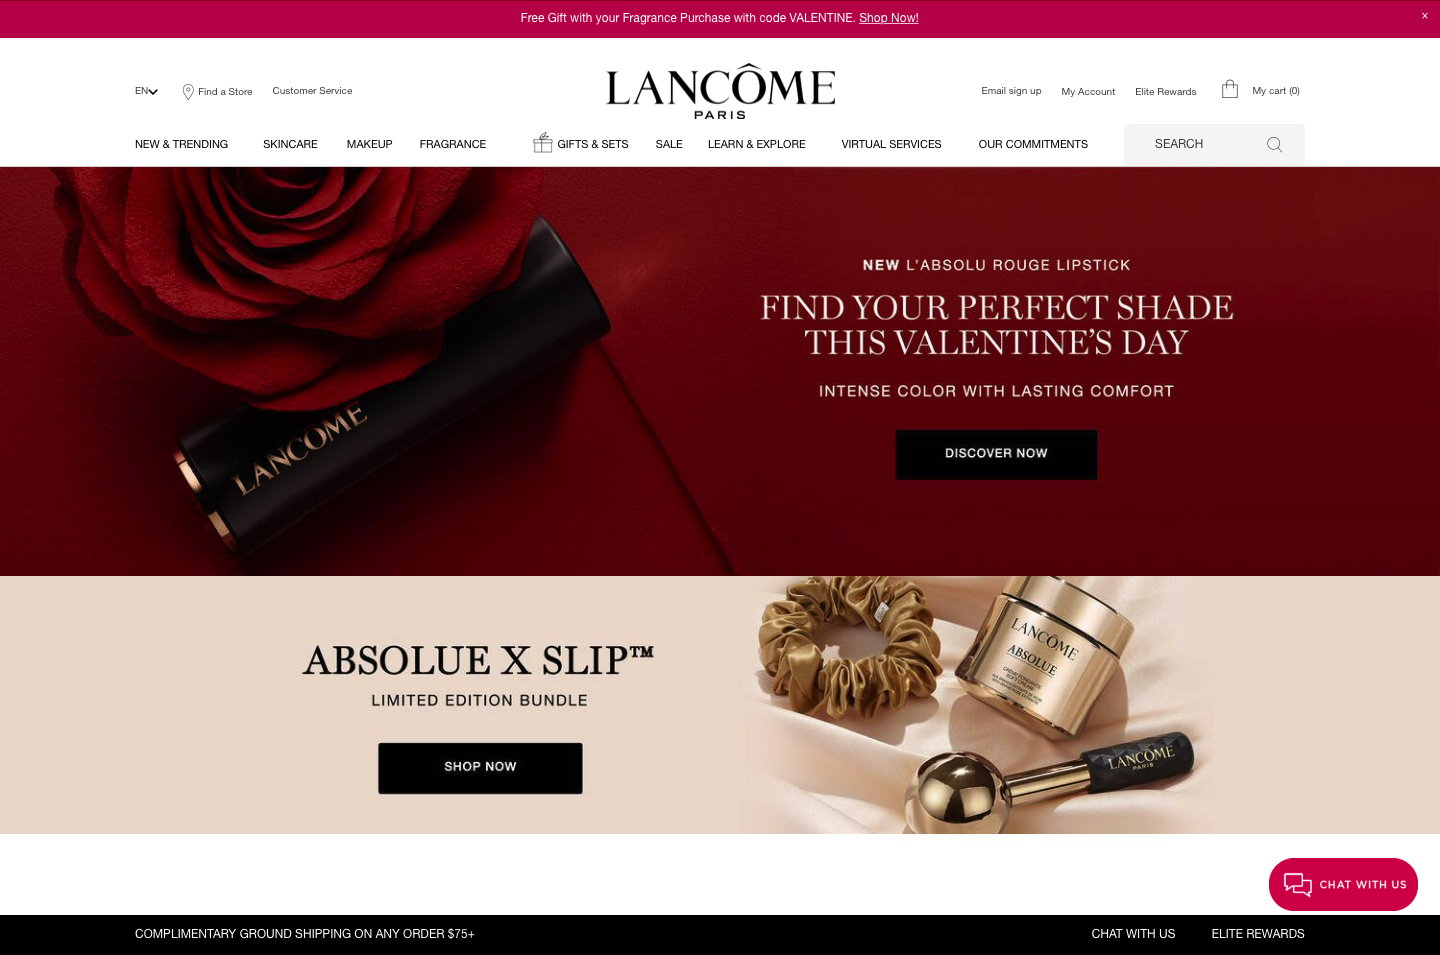 Lancôme’s headless website example